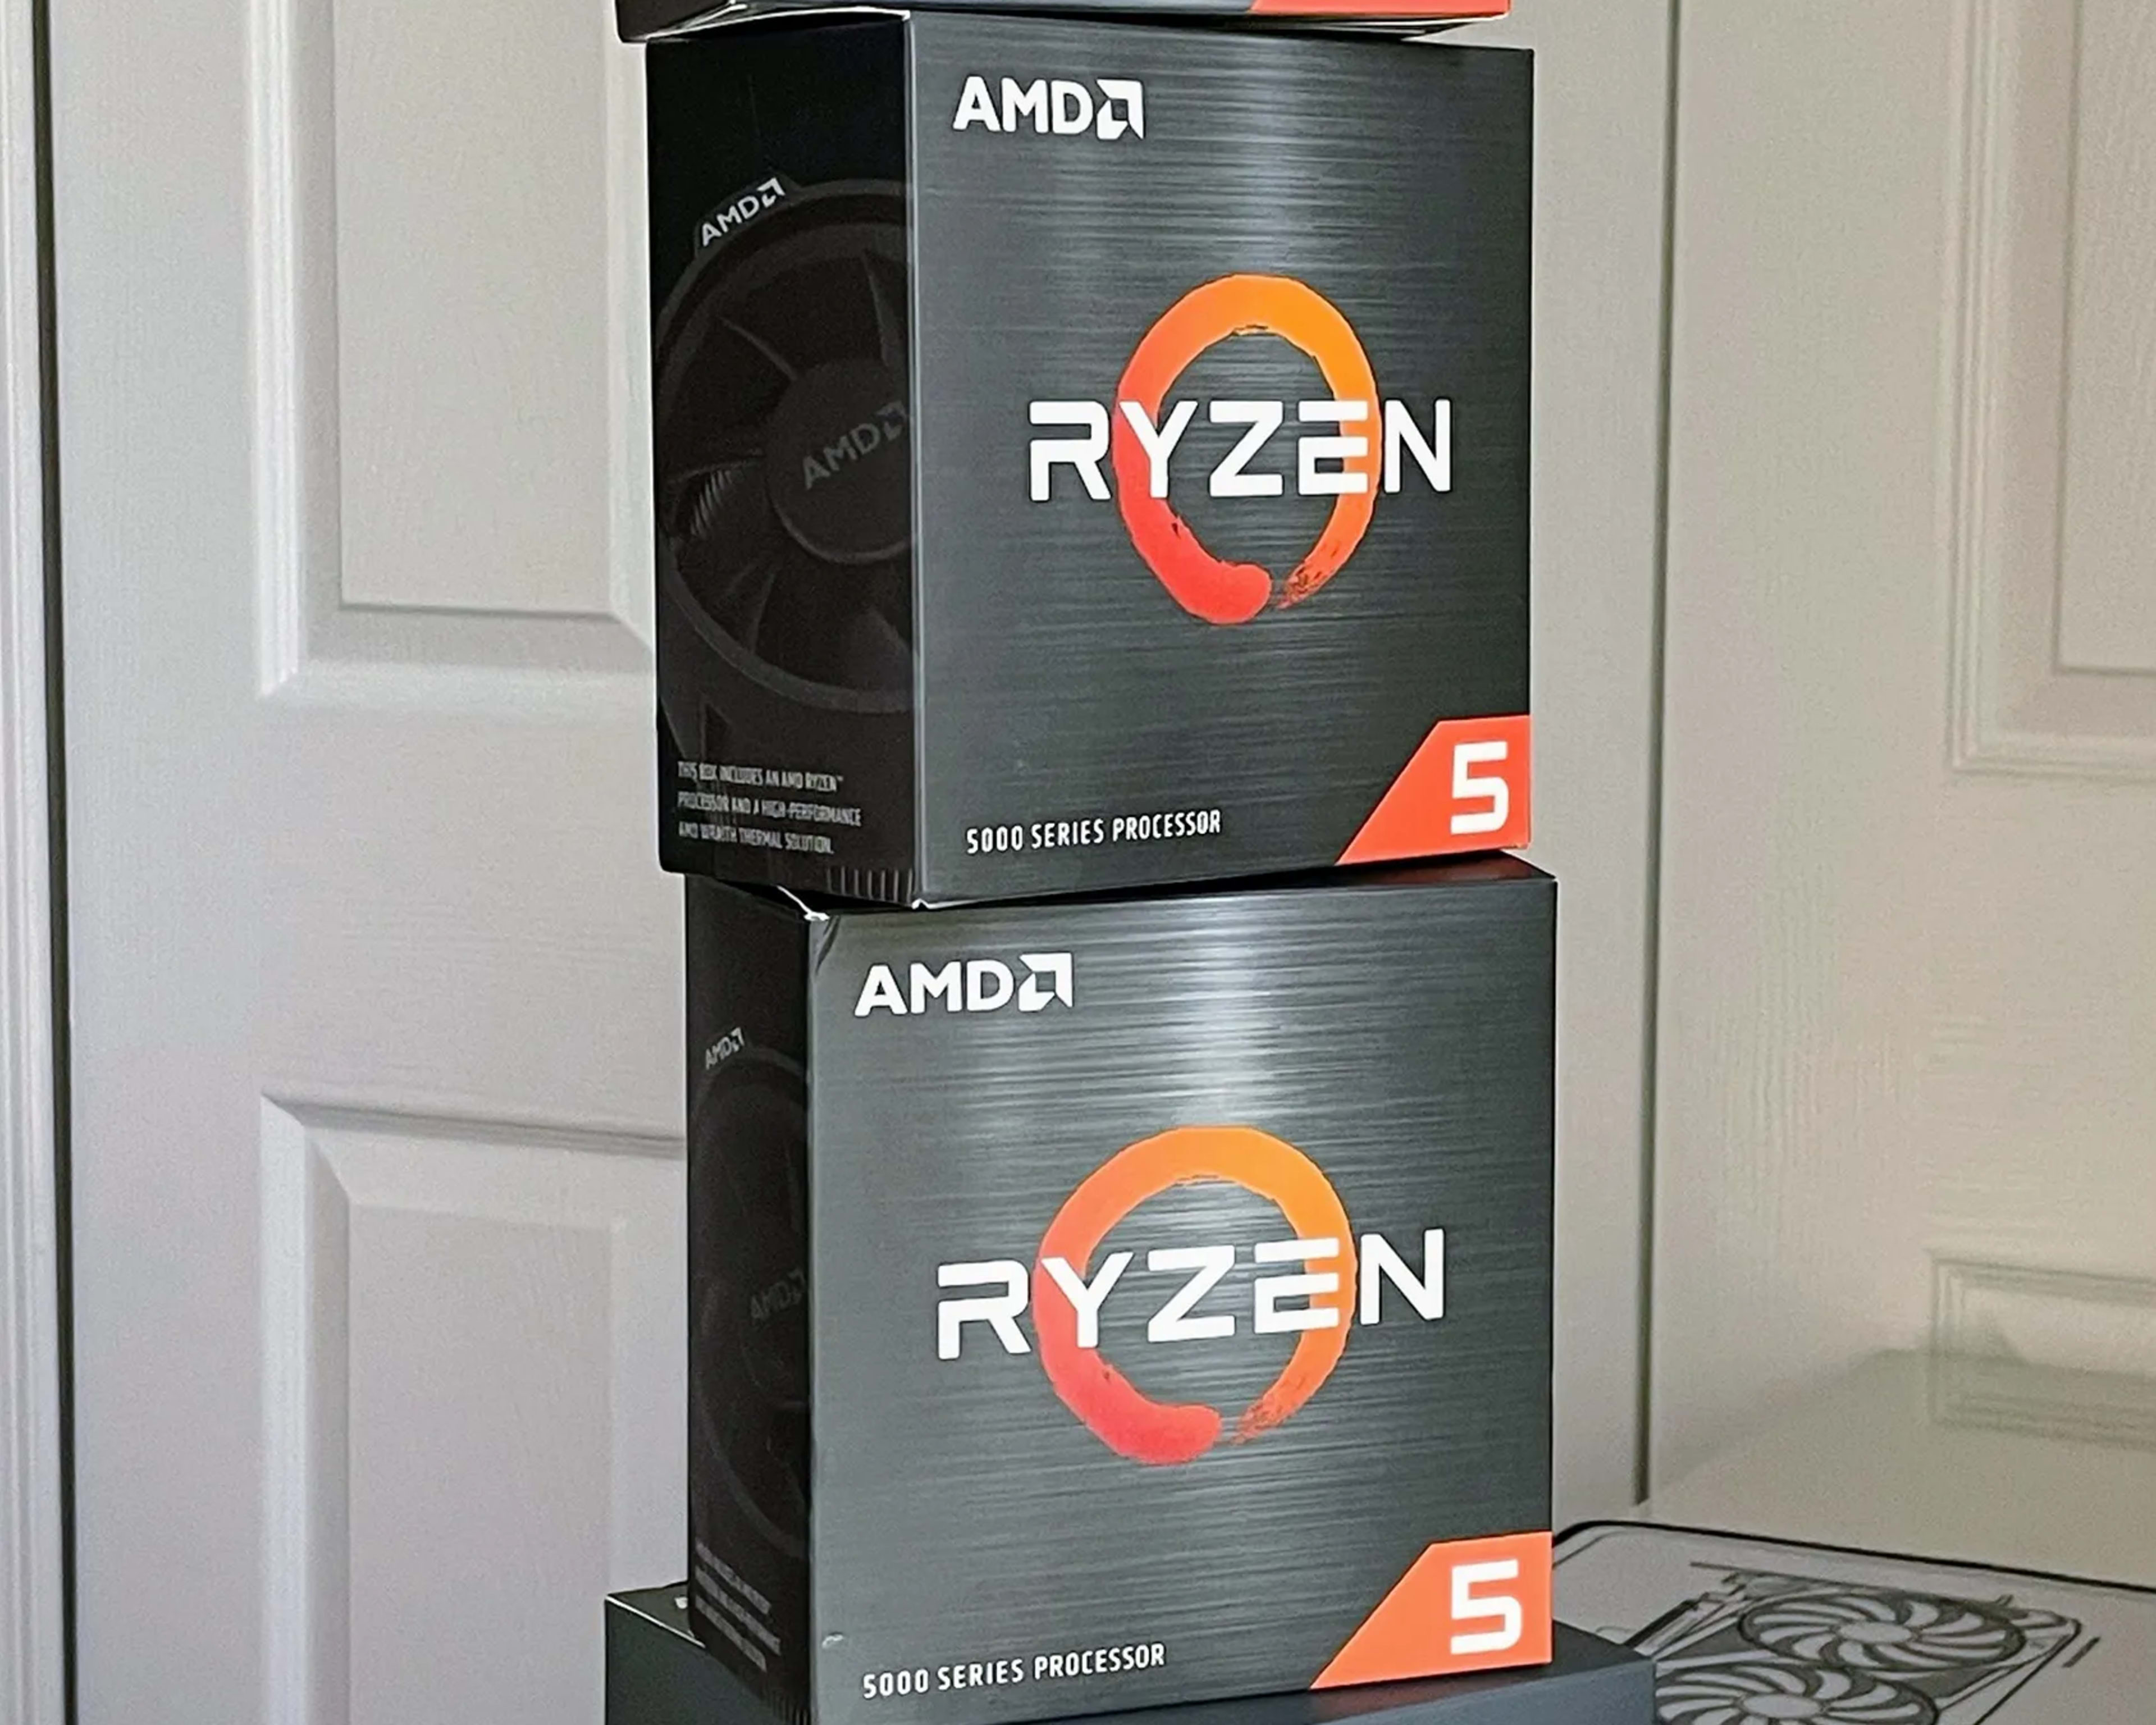 Empty AMD Ryzen CPU Boxes